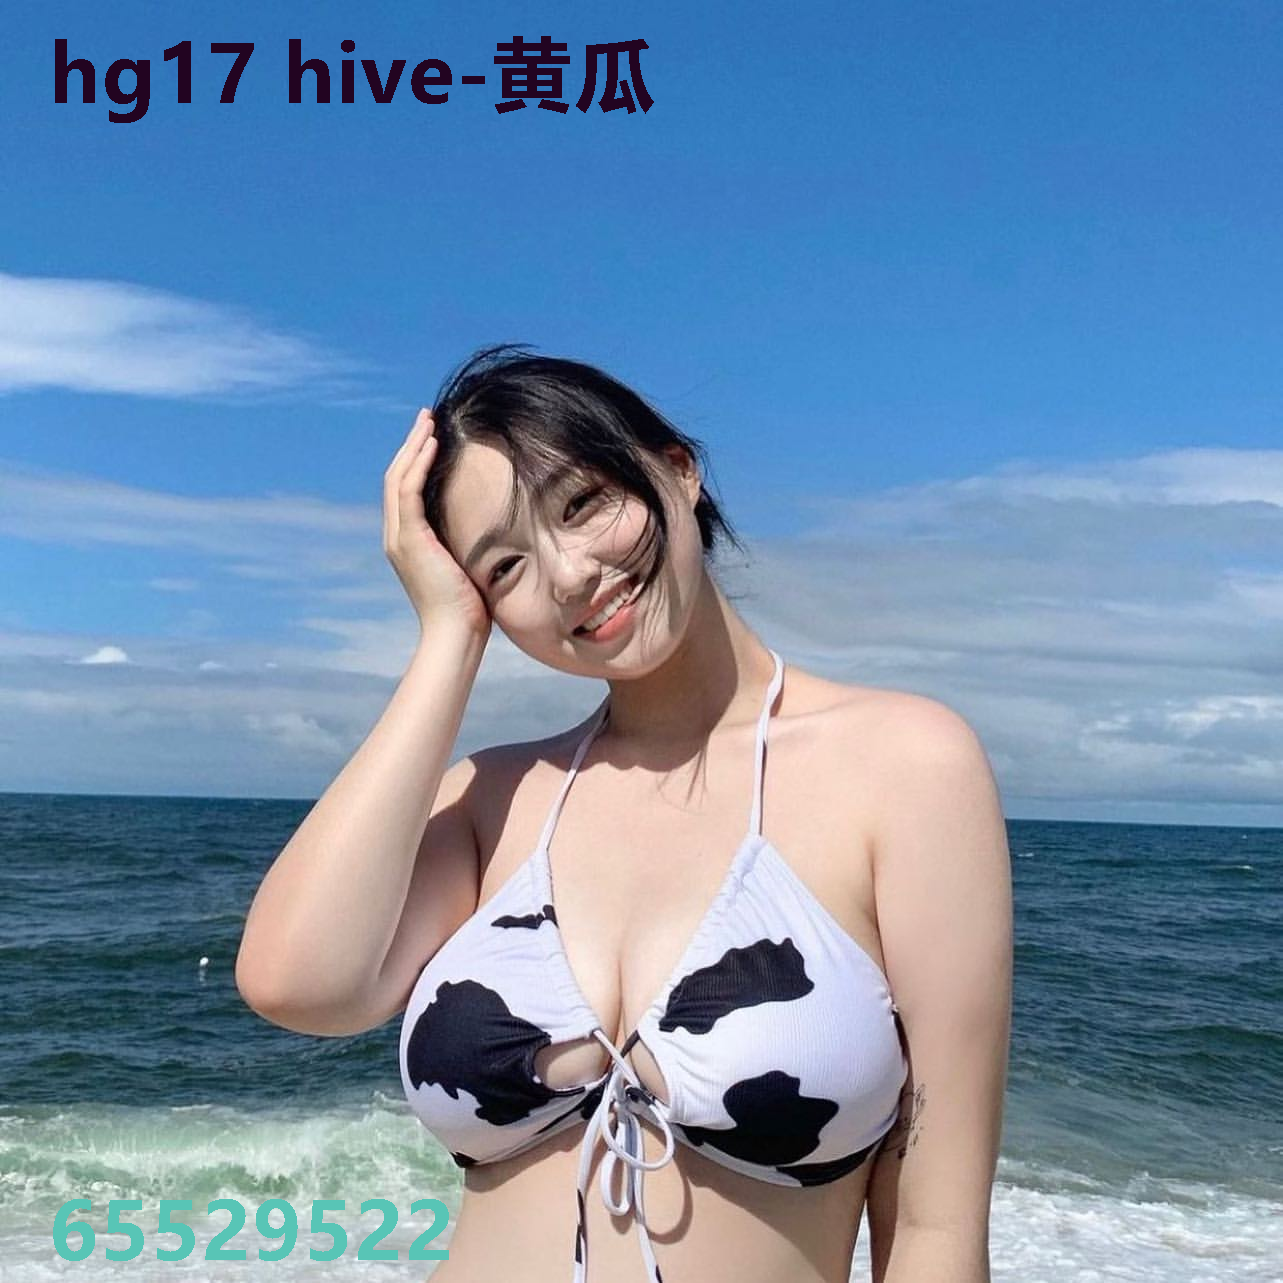 hg17 hive-黄瓜